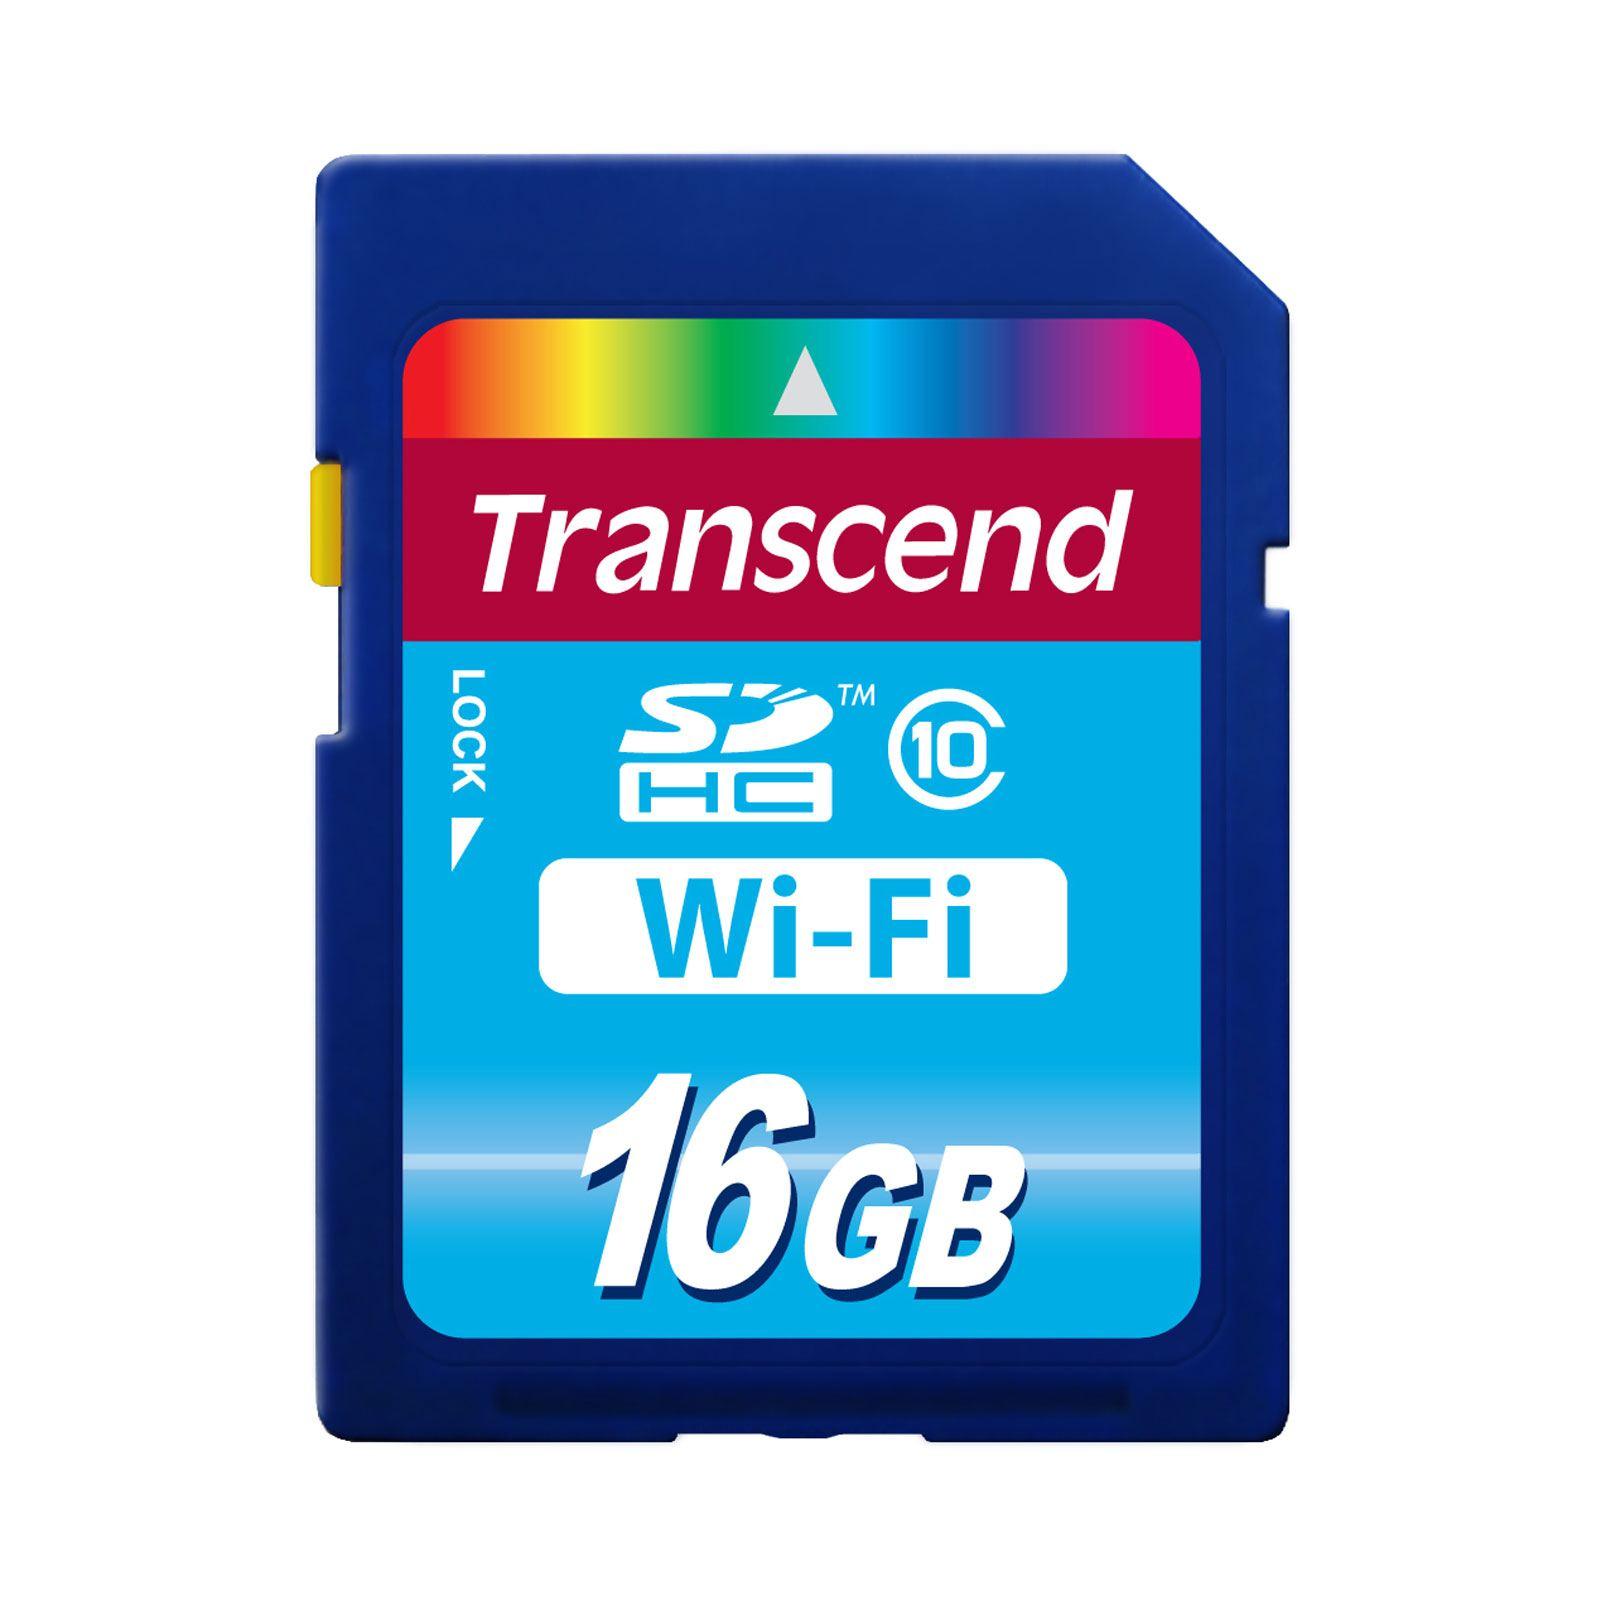 Transcend Wi-Fi 16GB Class 10 SD Card - TS16GWSDHC10 | CCL Computers